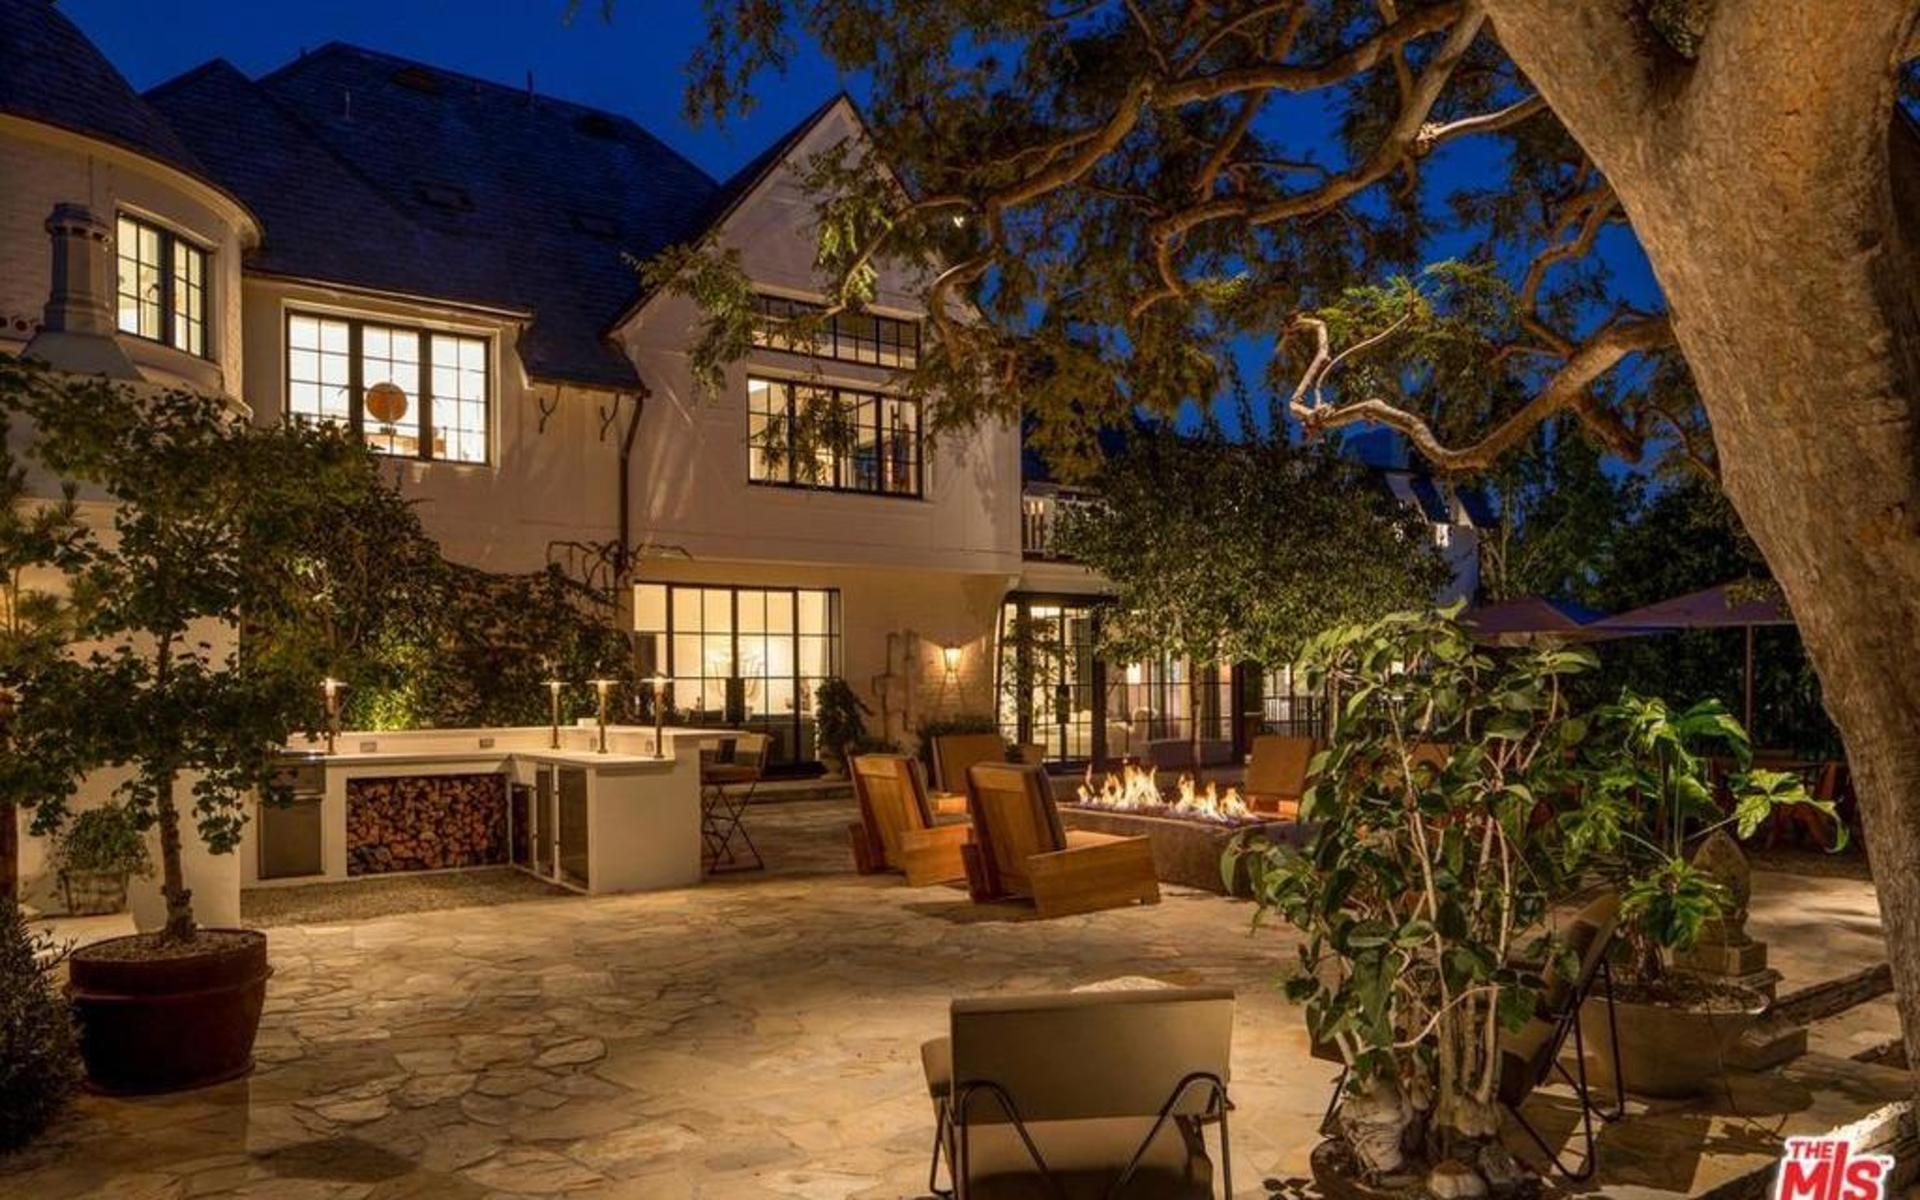 I Beverly Hills ligger paret Portia de Rossi och Ellen DeGeneres 1 000 kvadratmeter stora hus.